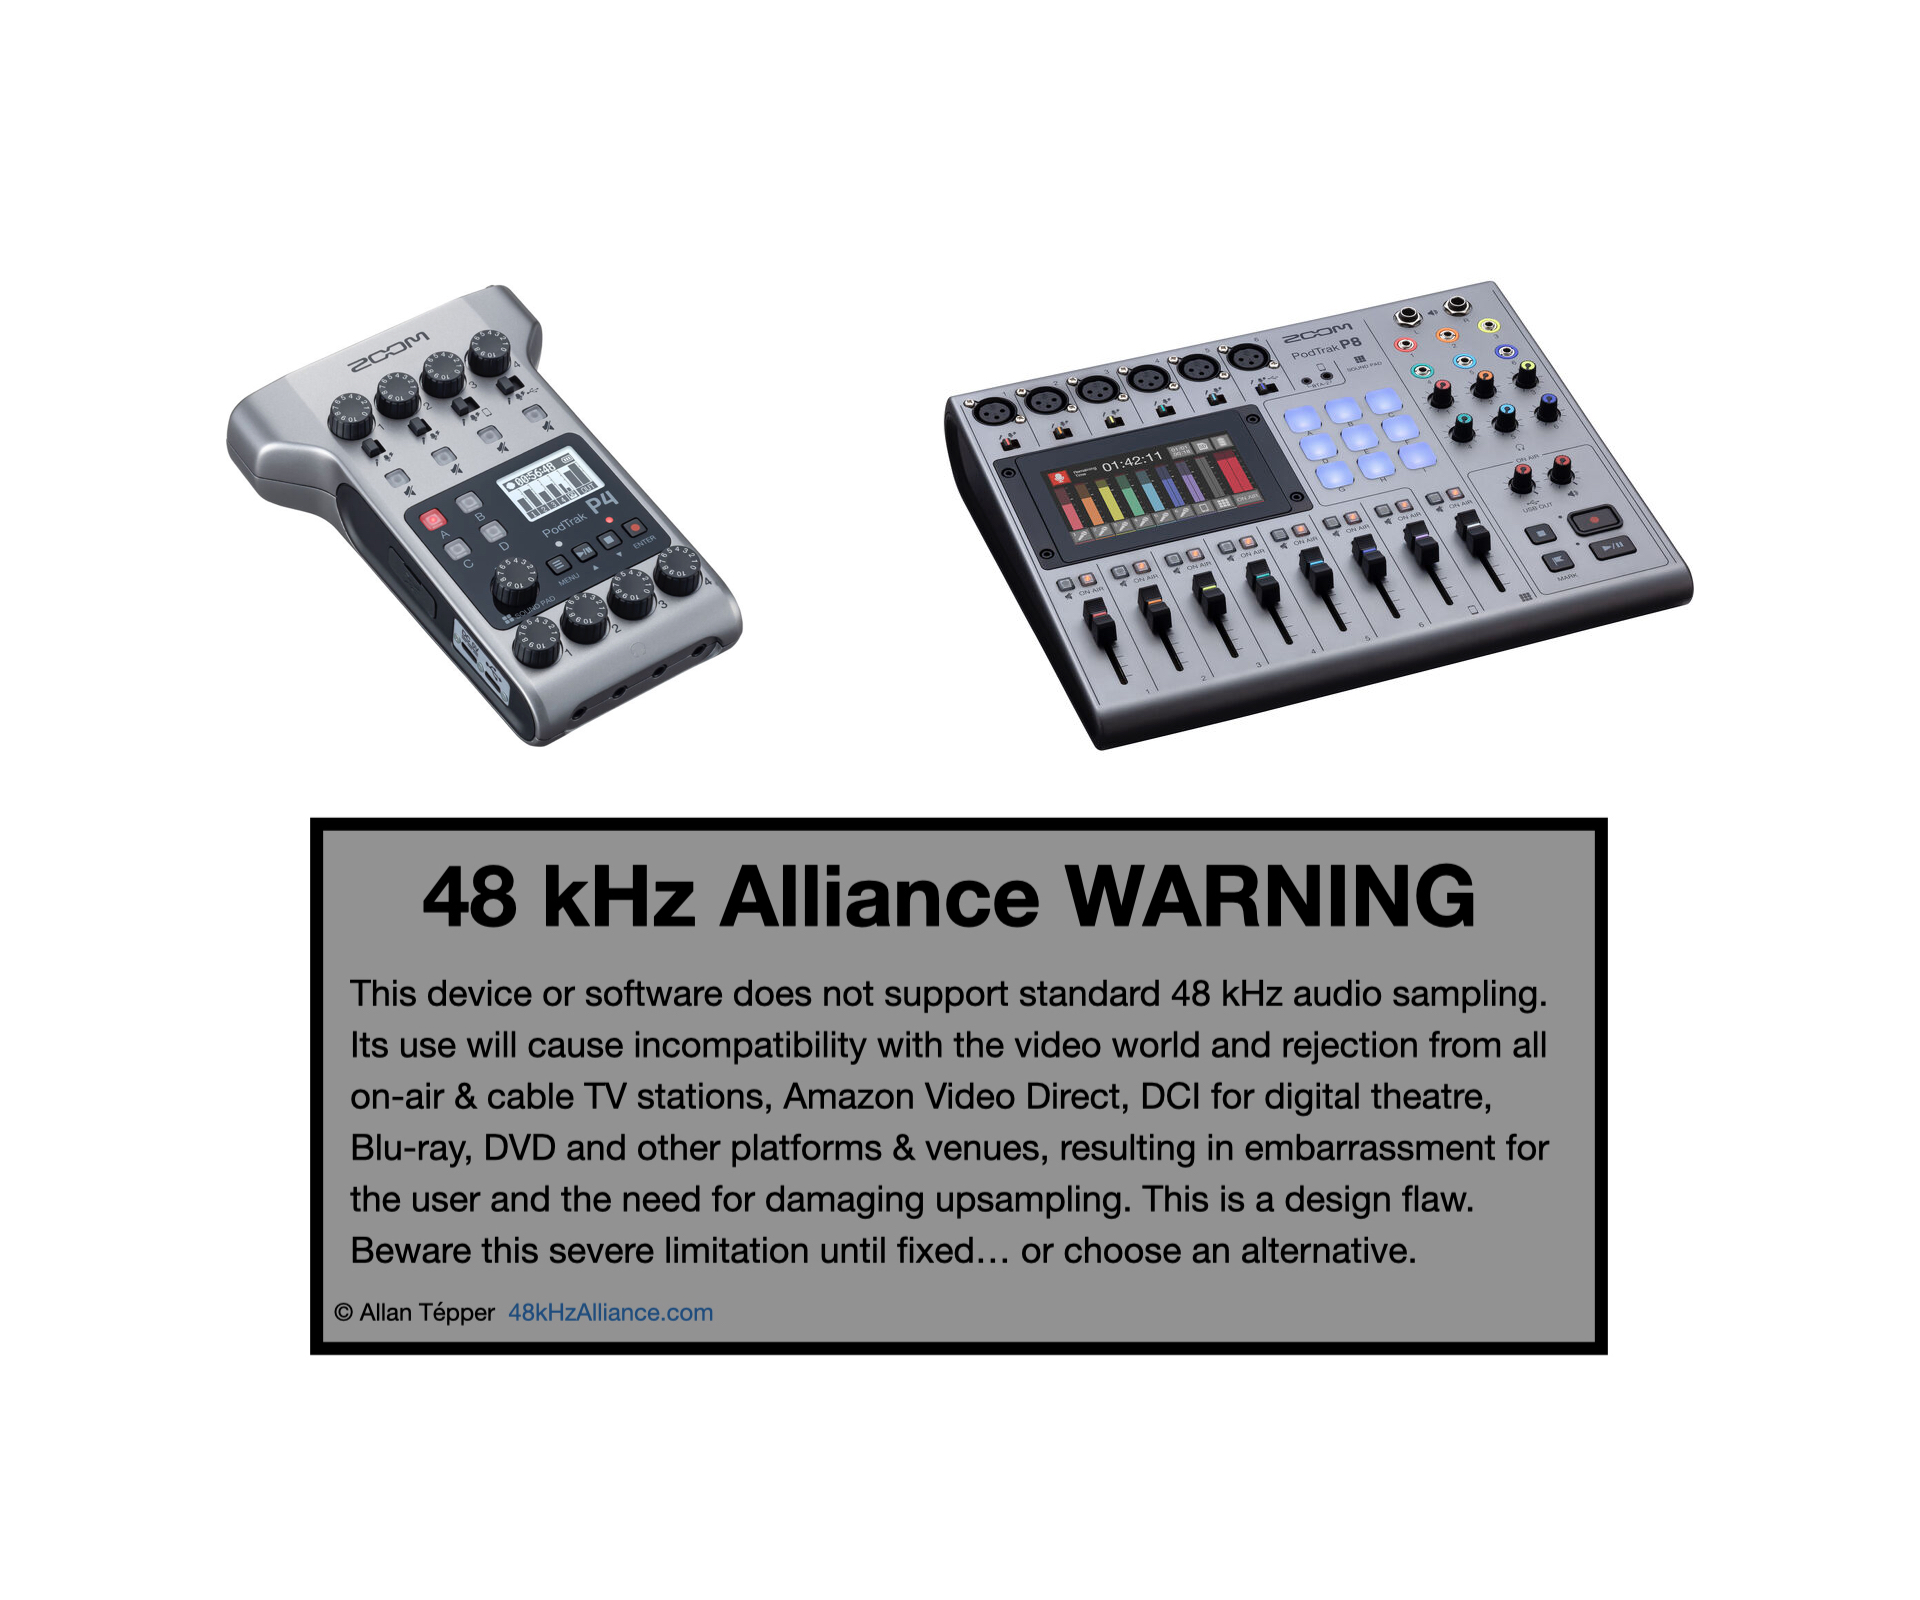 48 kHz Alliance Warning label is born 7